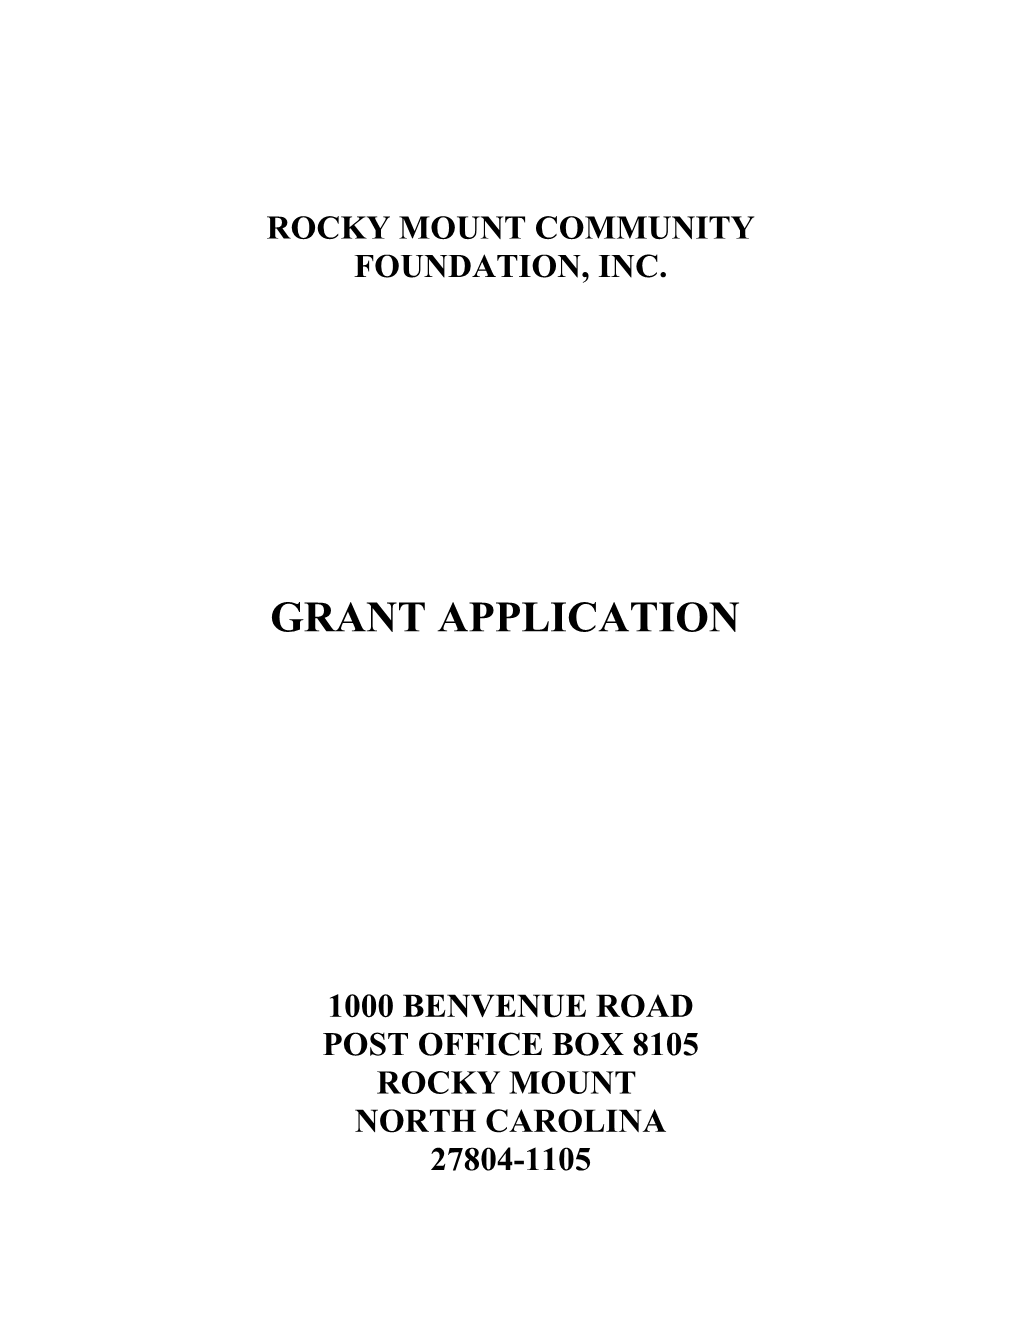 Rocky Mount Community Foundation Inc